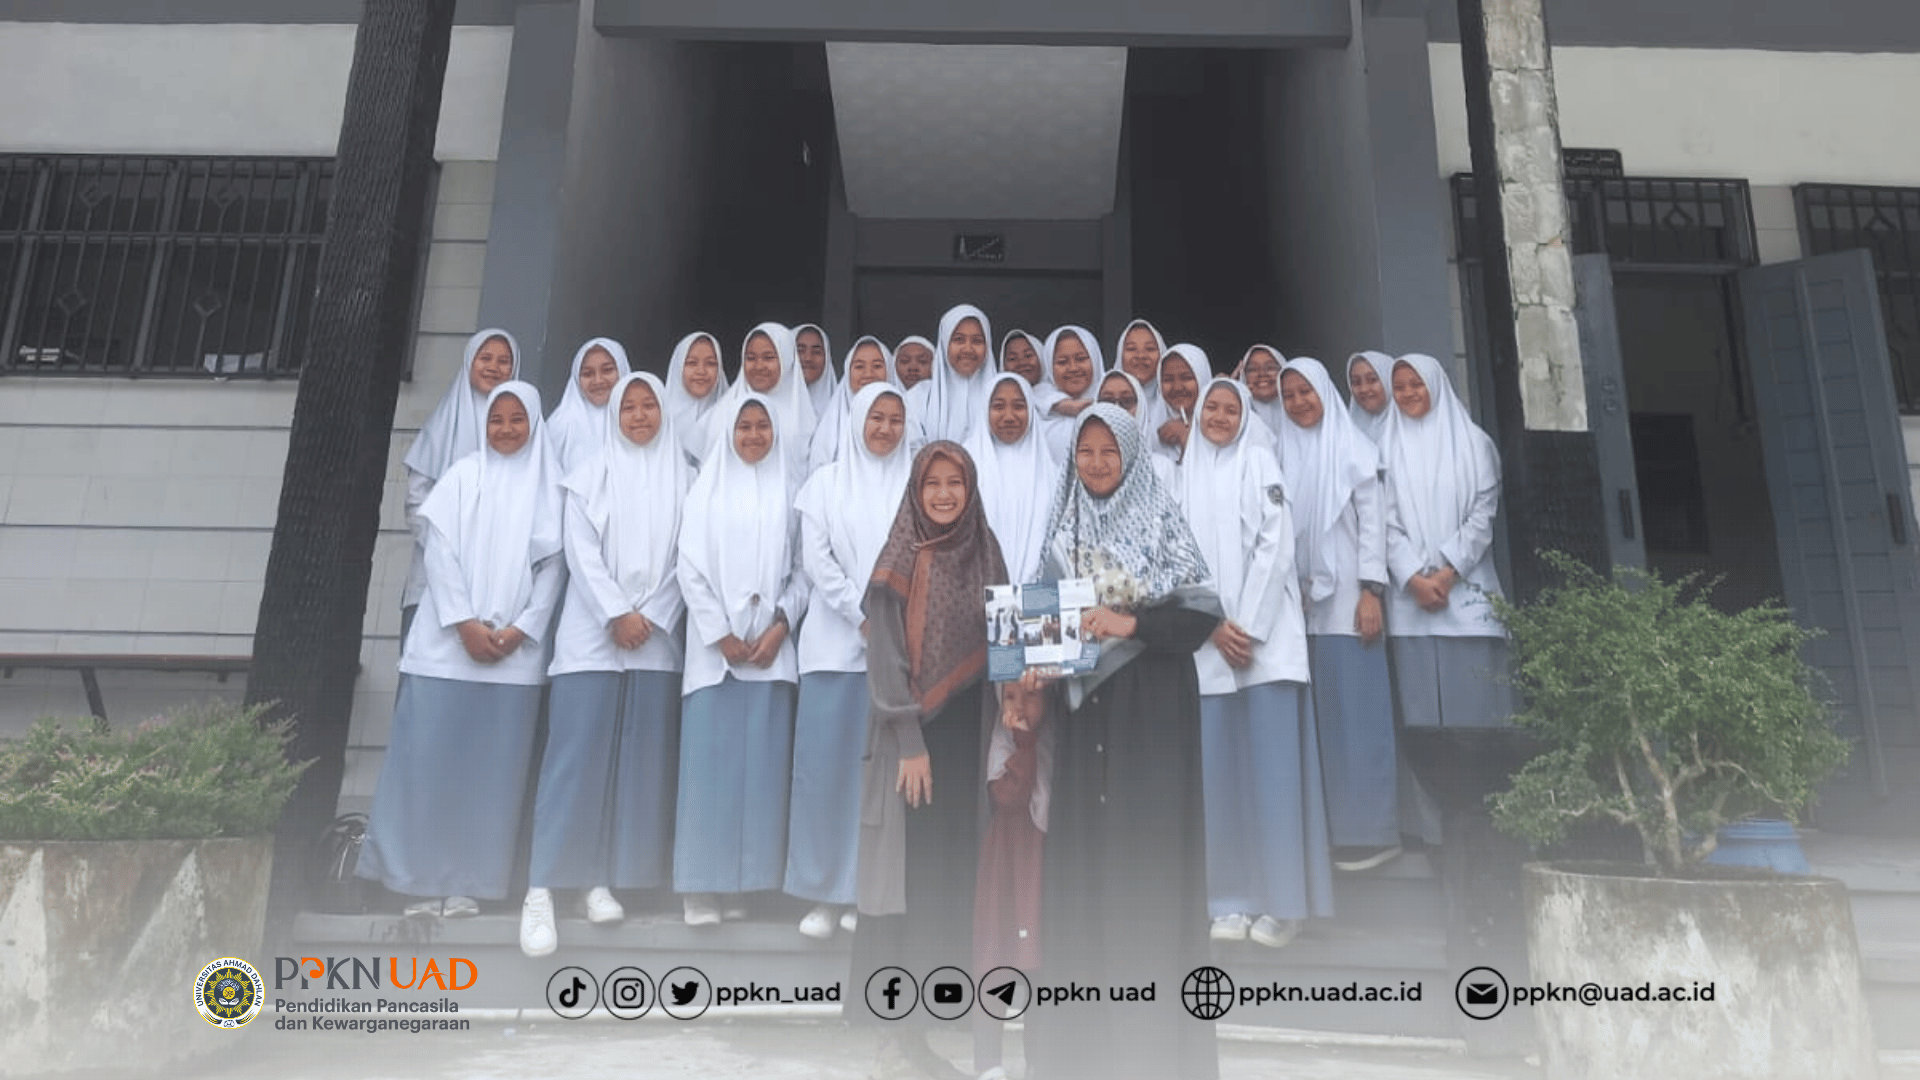 Syifa Siti Aulia, Sekprodi PPKn UAD berfoto bersama pengasuh dan santri Ponpes Muhammadiyah Al-Furqon Tasikmalaya